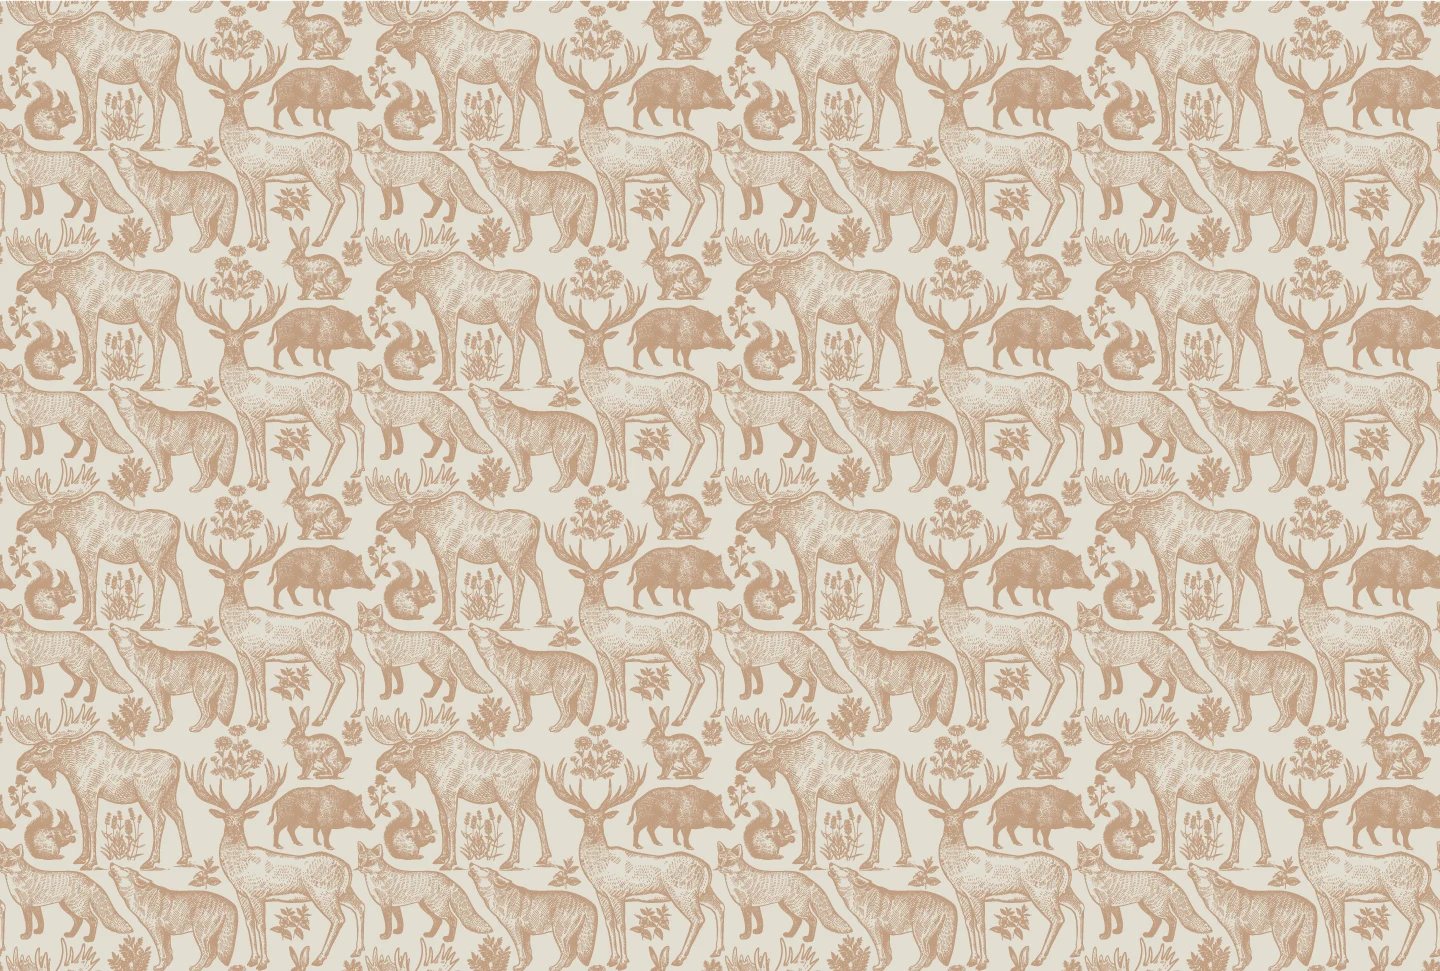 wallpaper-design-vintage-style-forest-animals-brown